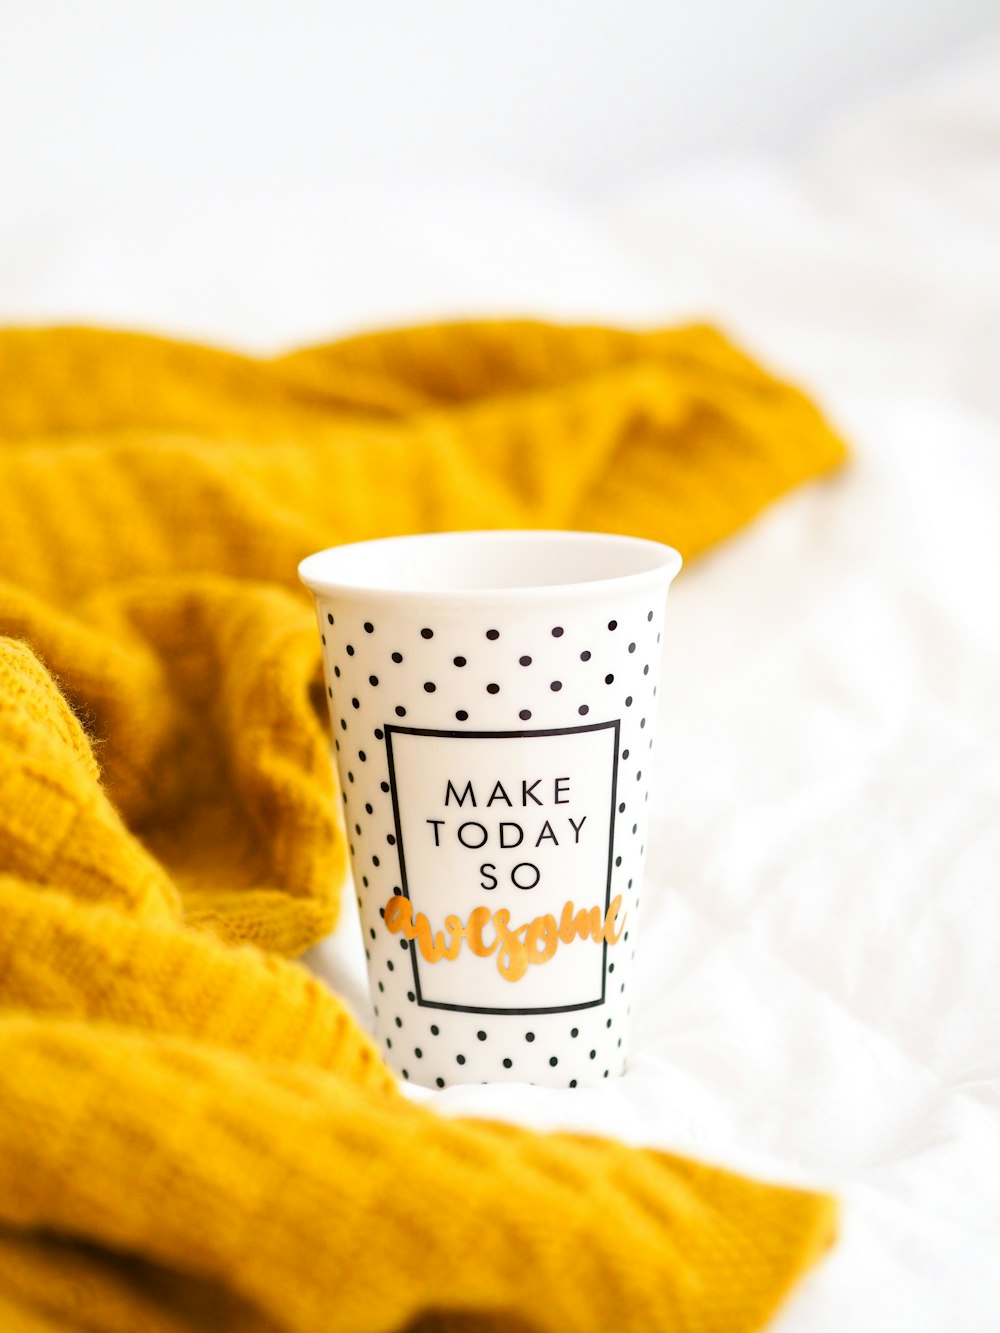 white and black polka dot ceramic mug beside yellow textile